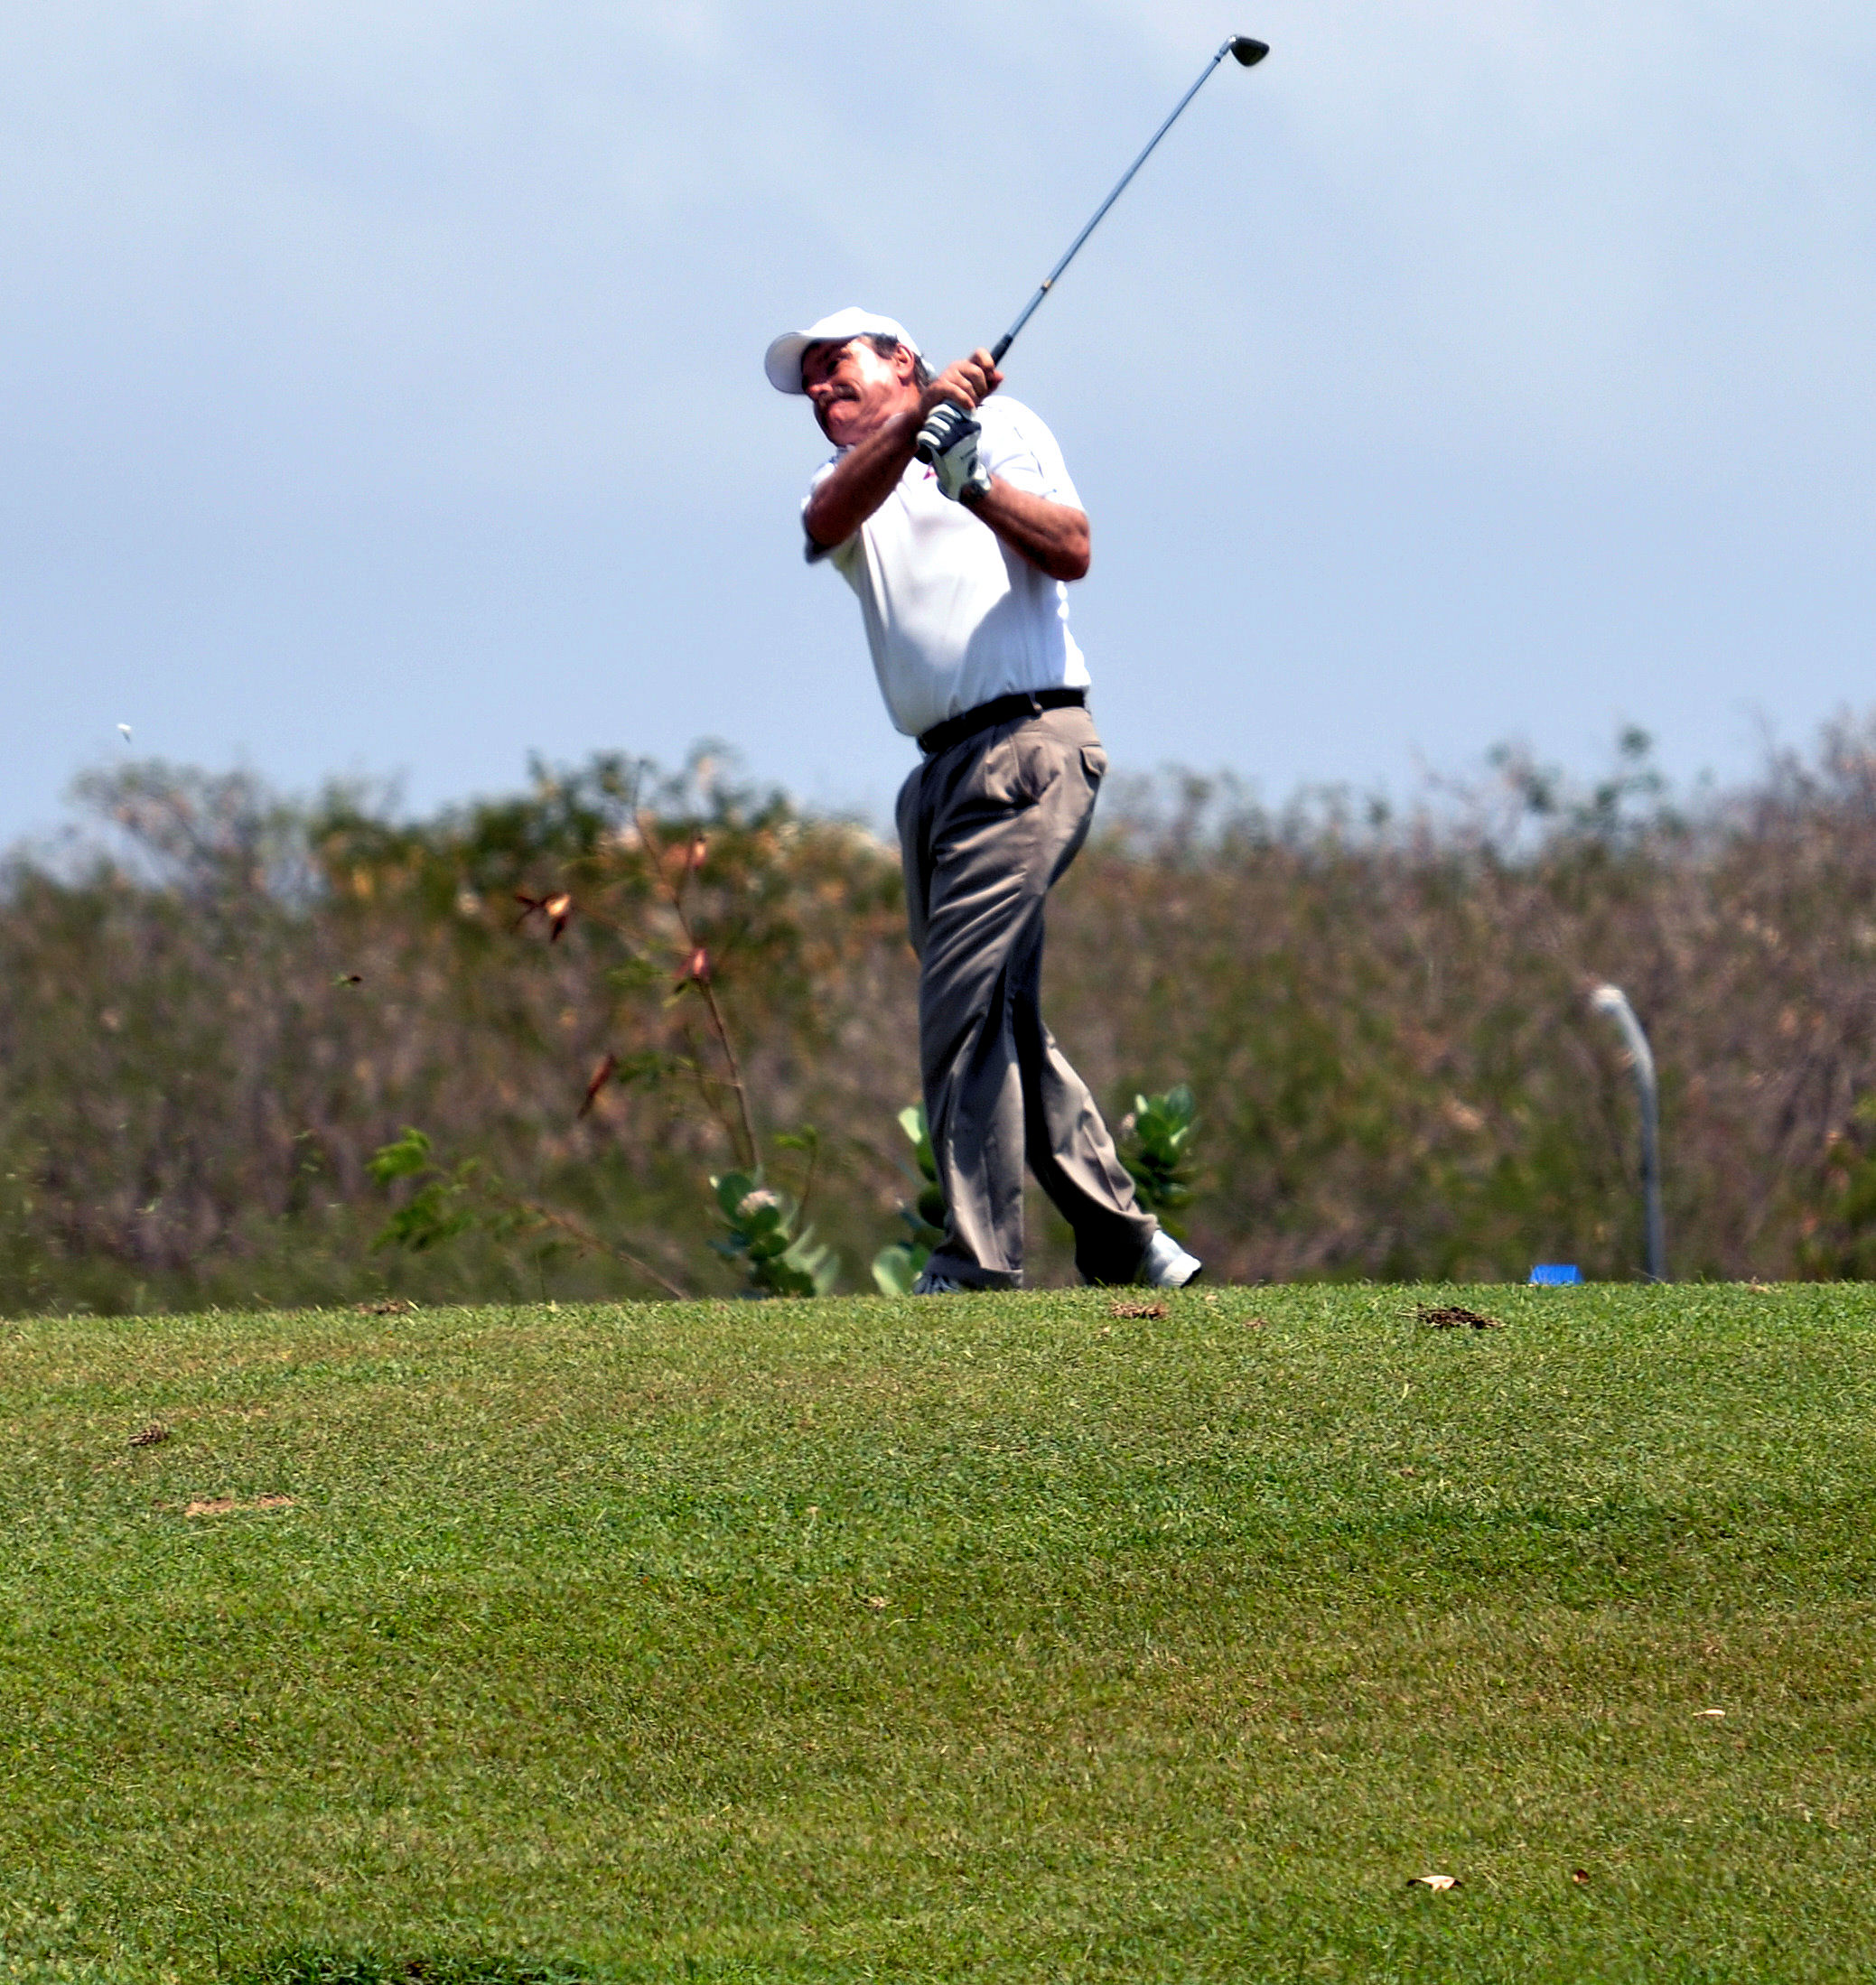 The 4th VIP.com Pro-Am Golf Tournament op de prachtige 5e hole van Blue Bay Golf Club in Curacao.